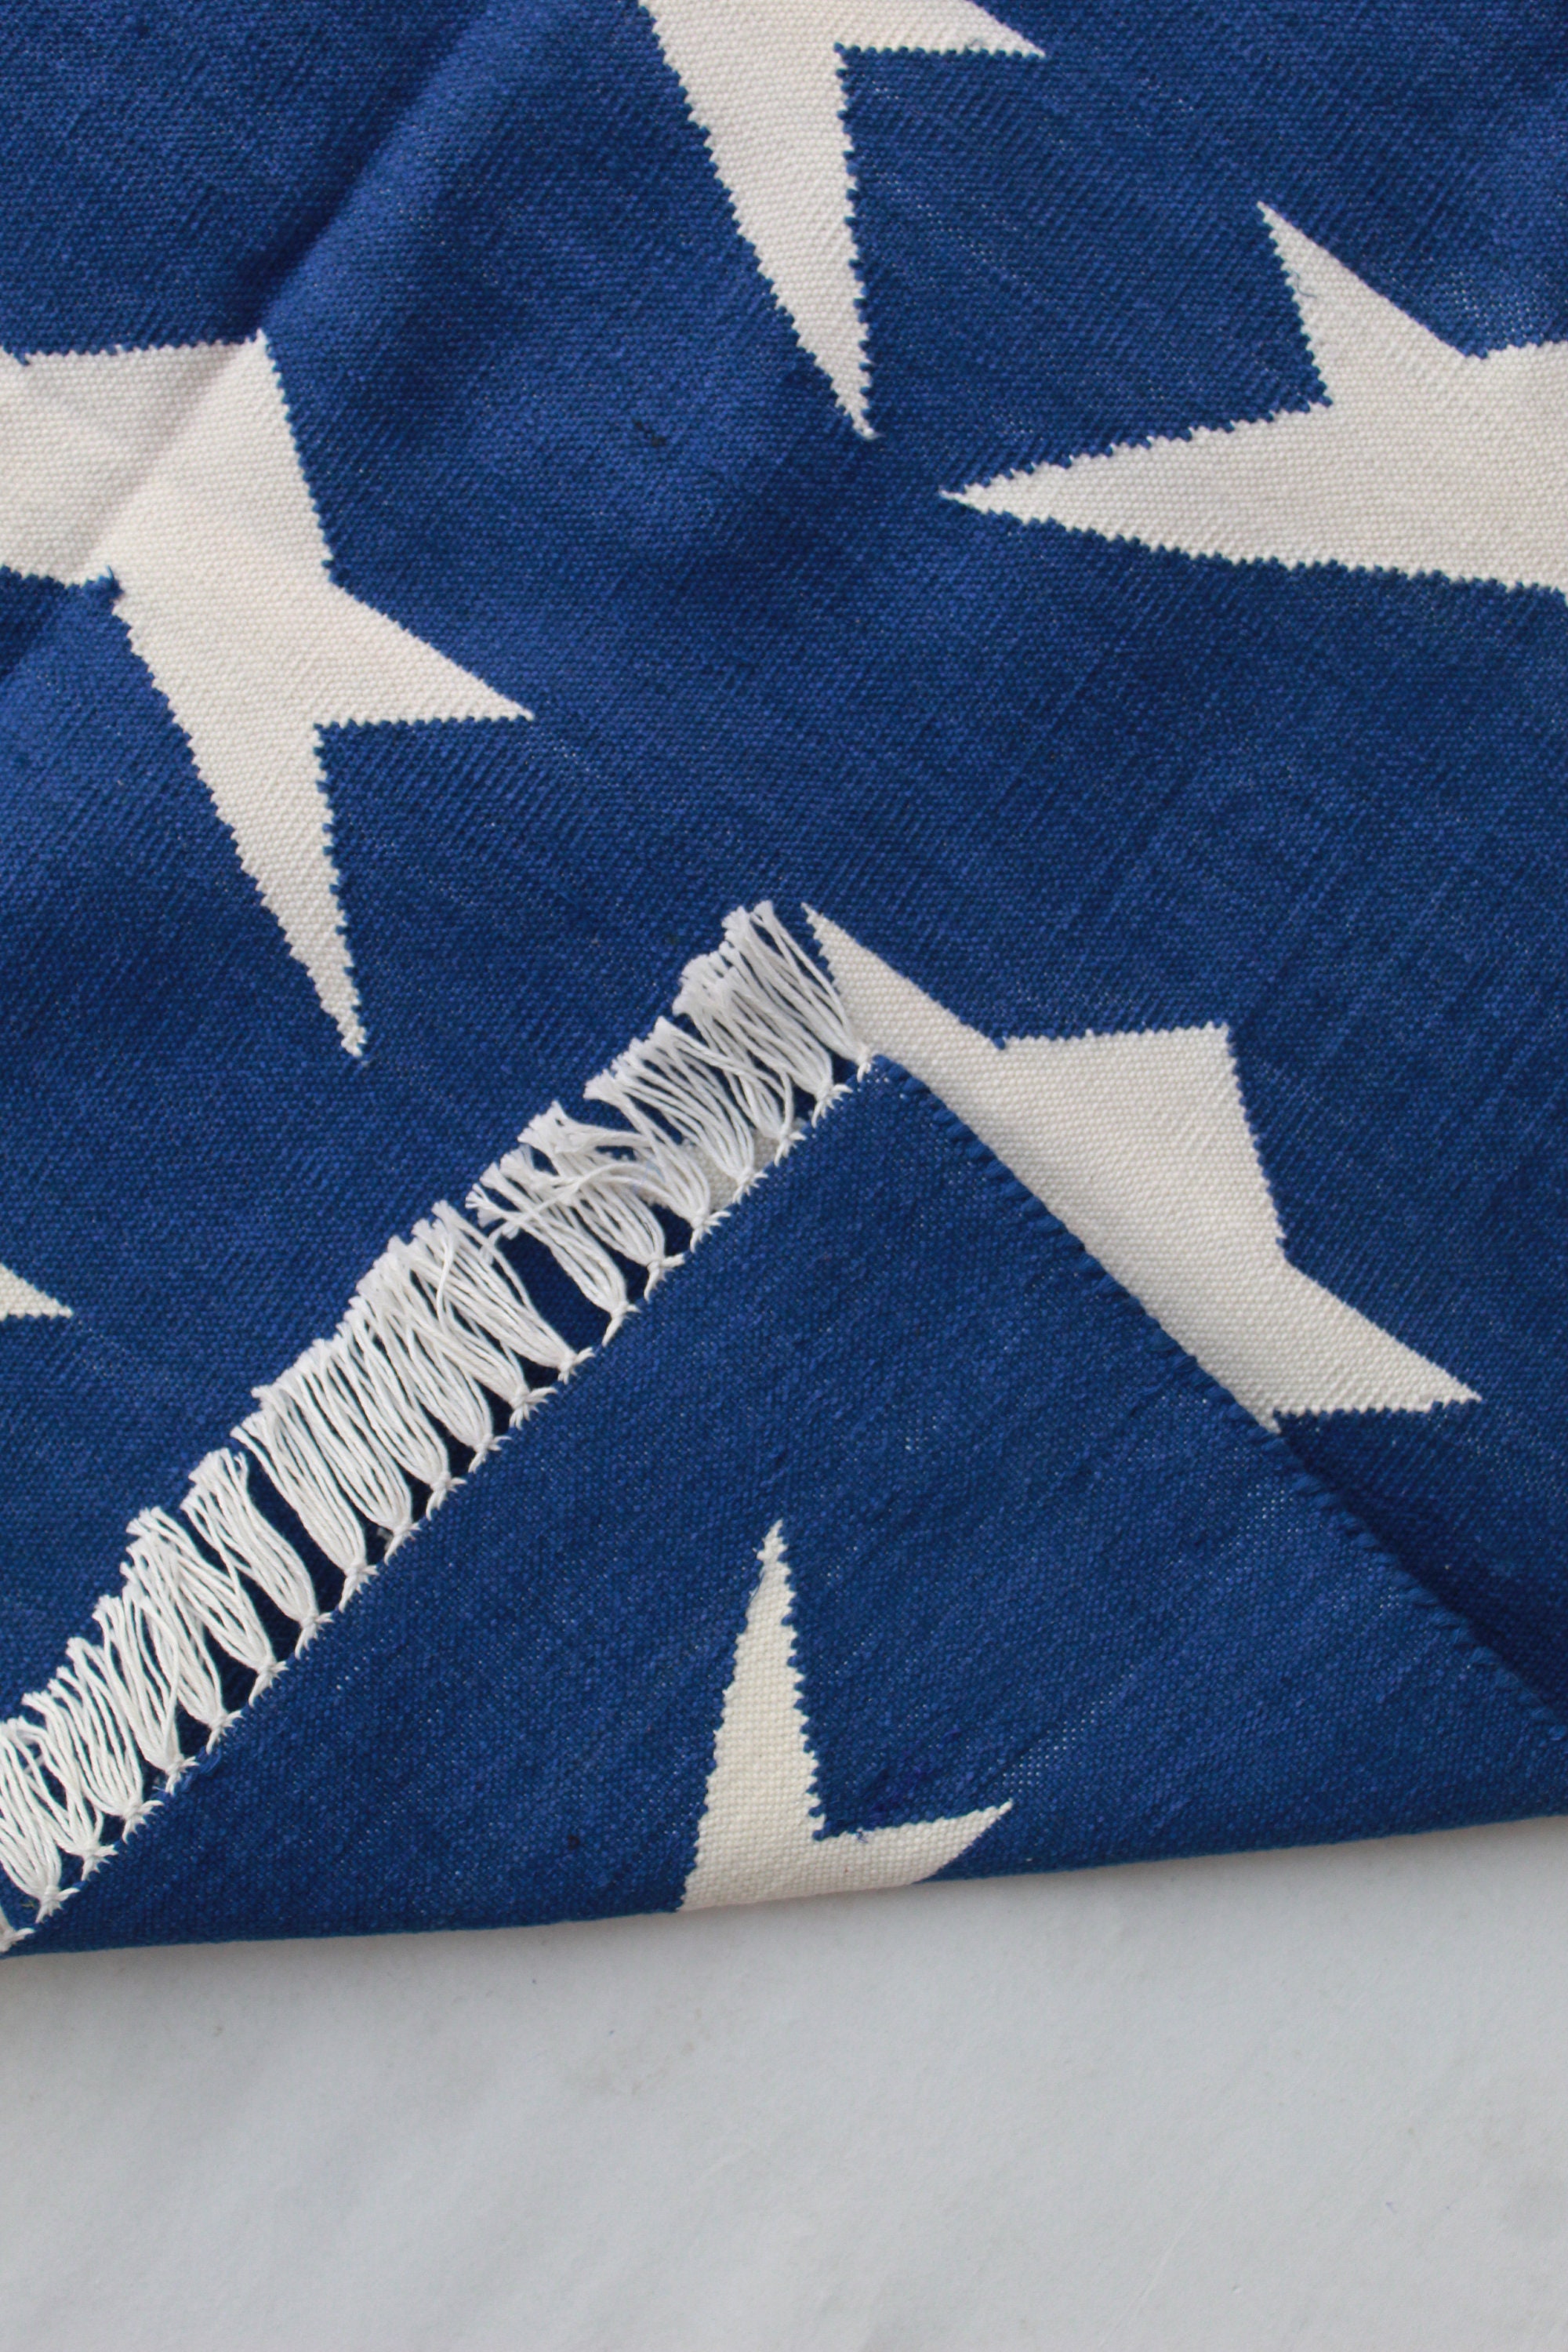 Multisize Handmade Cotton Rugs Navy Blue and White Star - Etsy UK